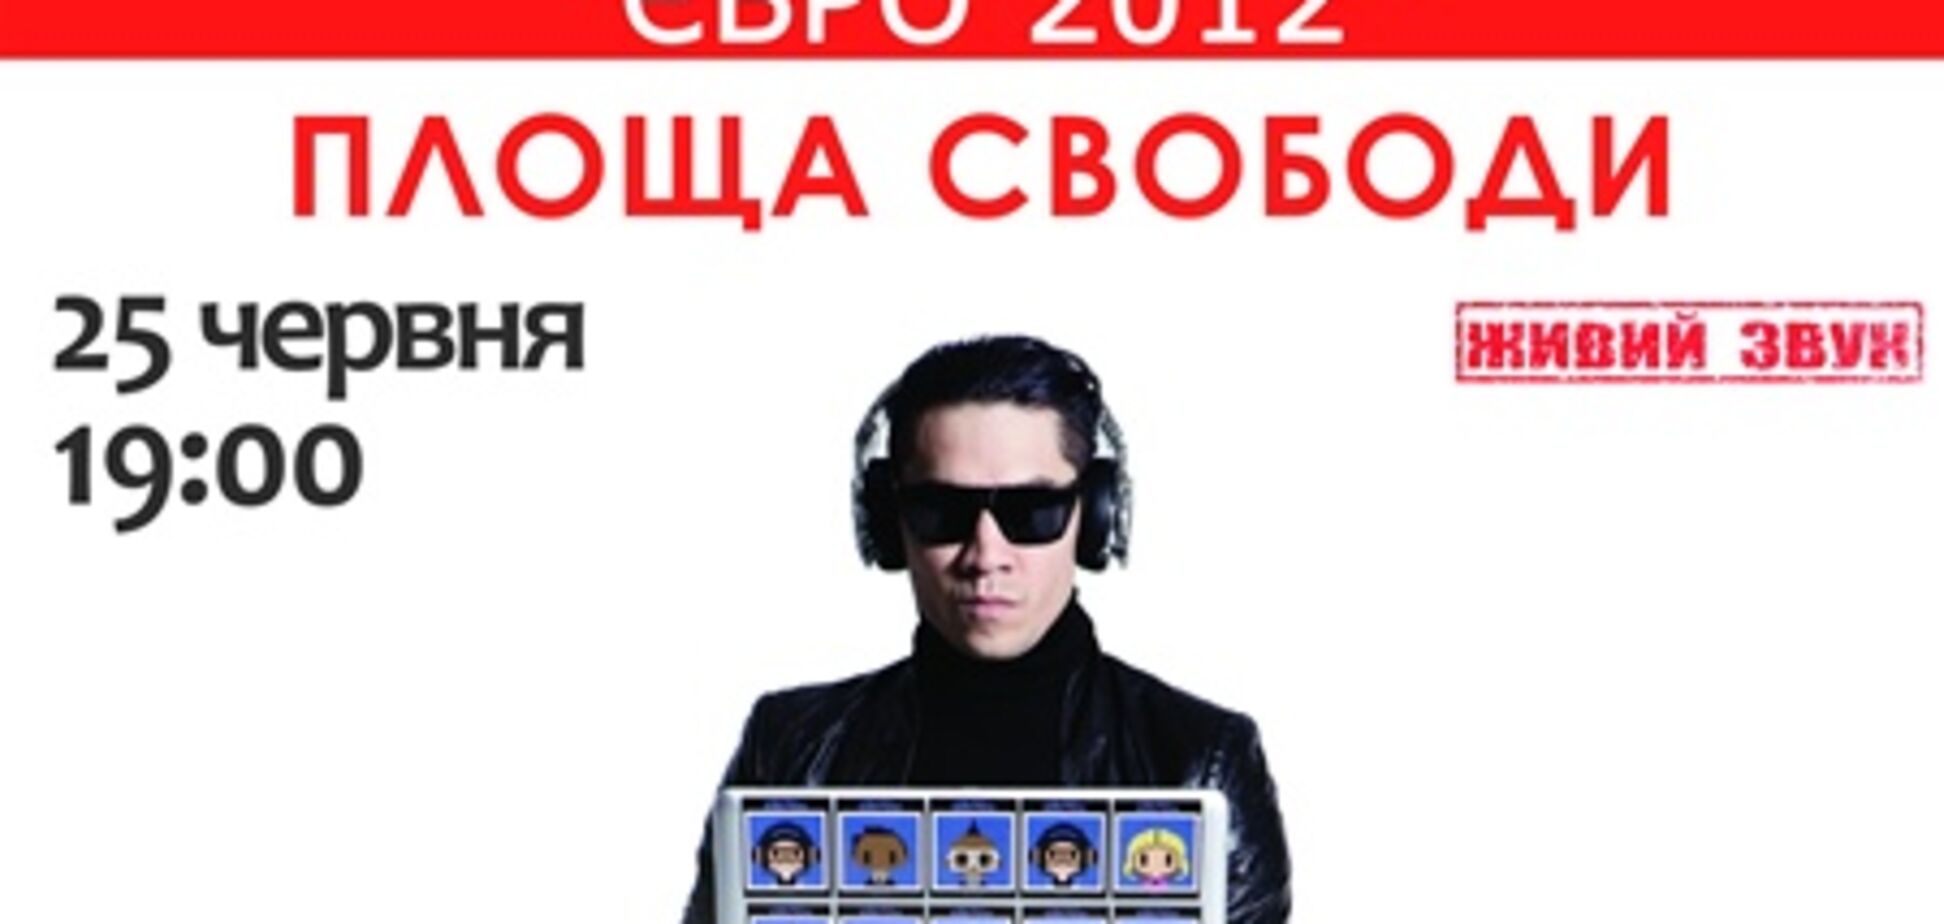 25 июня 'DJ Show by Taboo' в Харькове